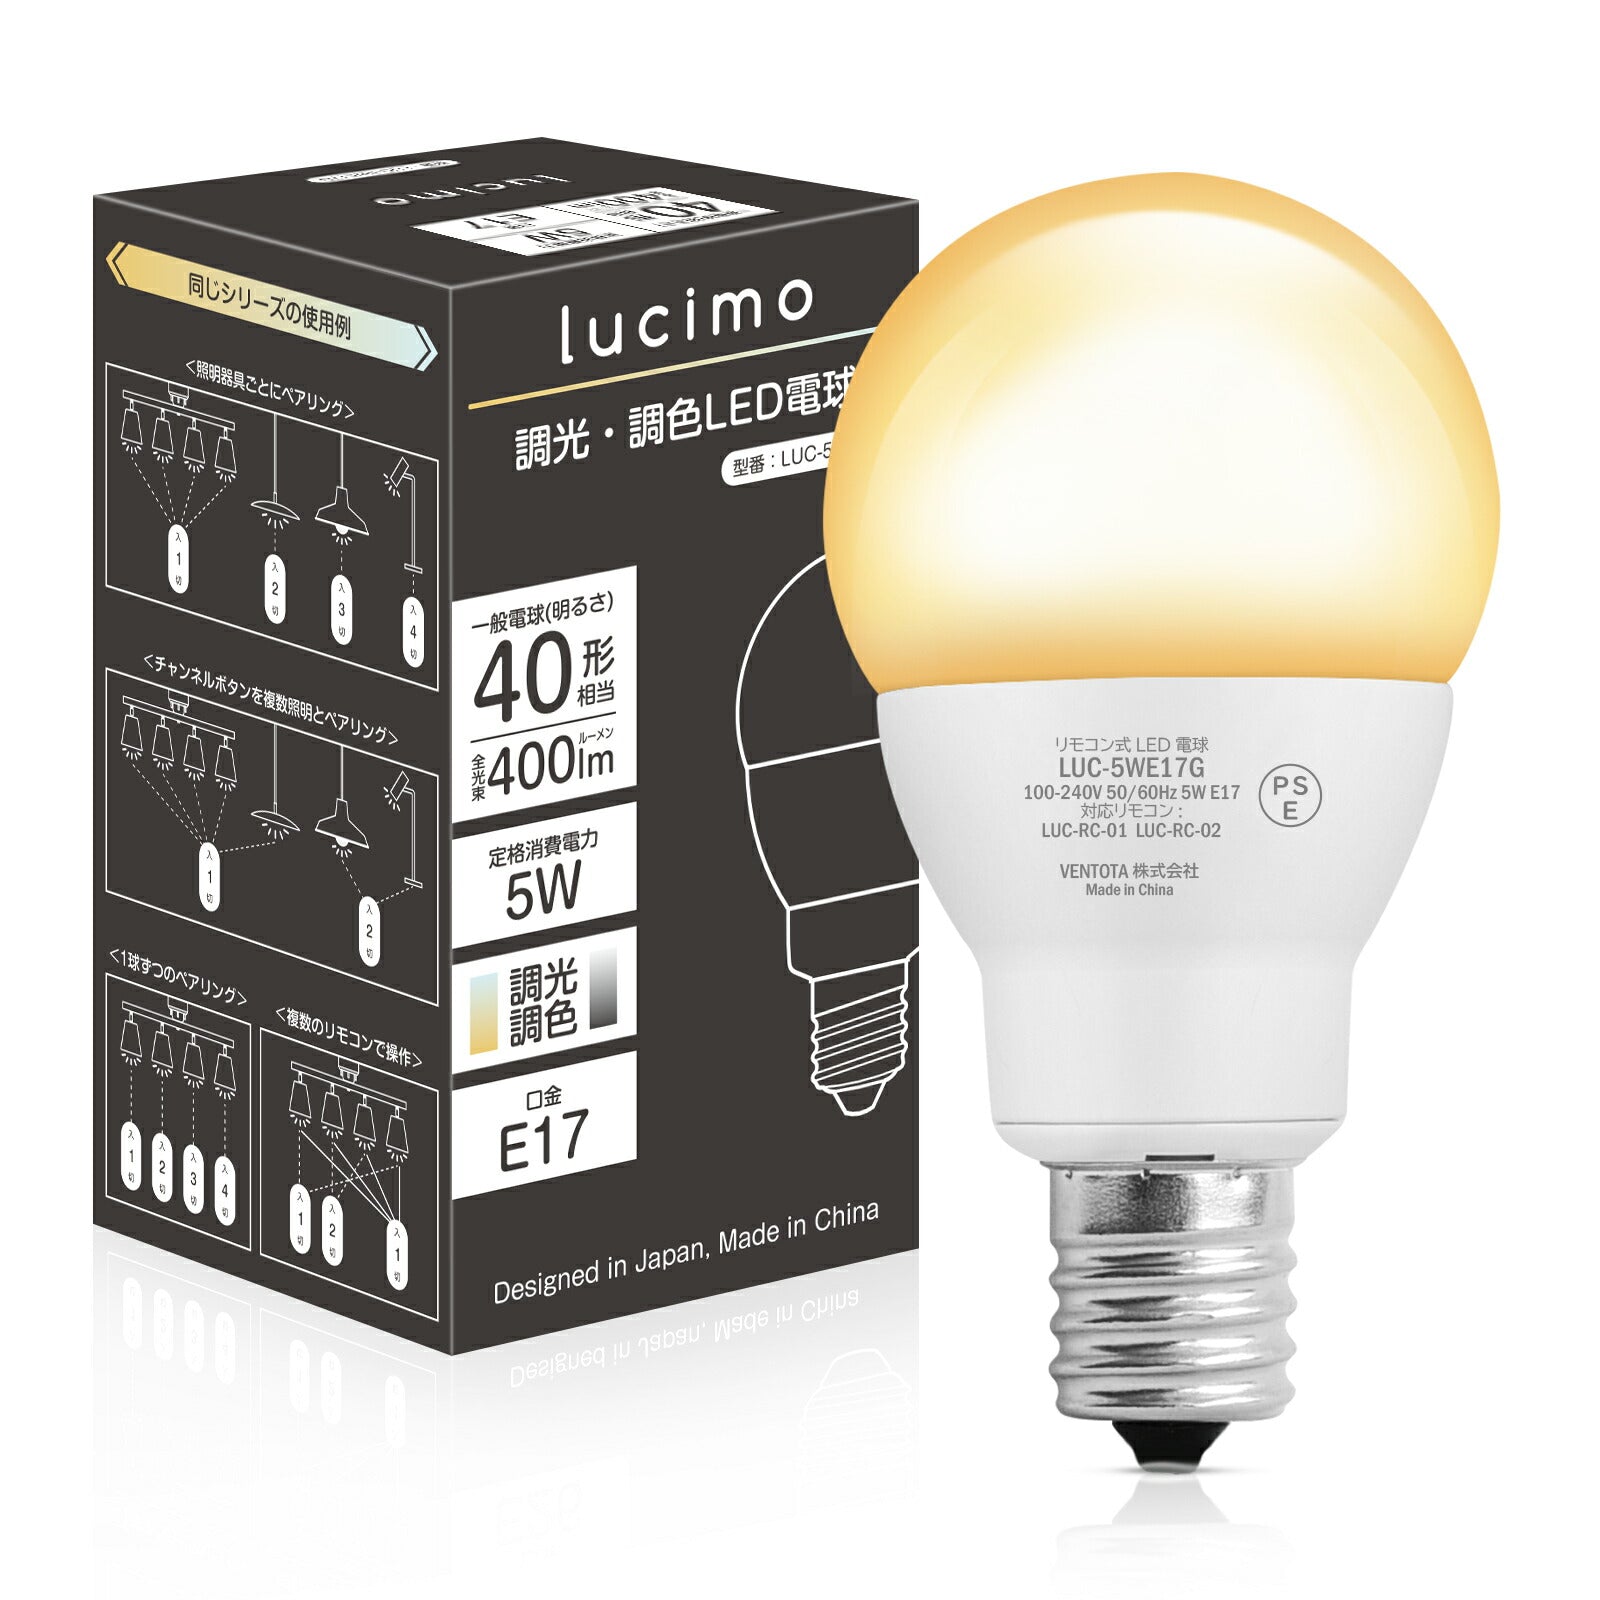 LED電球一箱4個入り お手軽価格で贈りやすい - 蛍光灯・電球